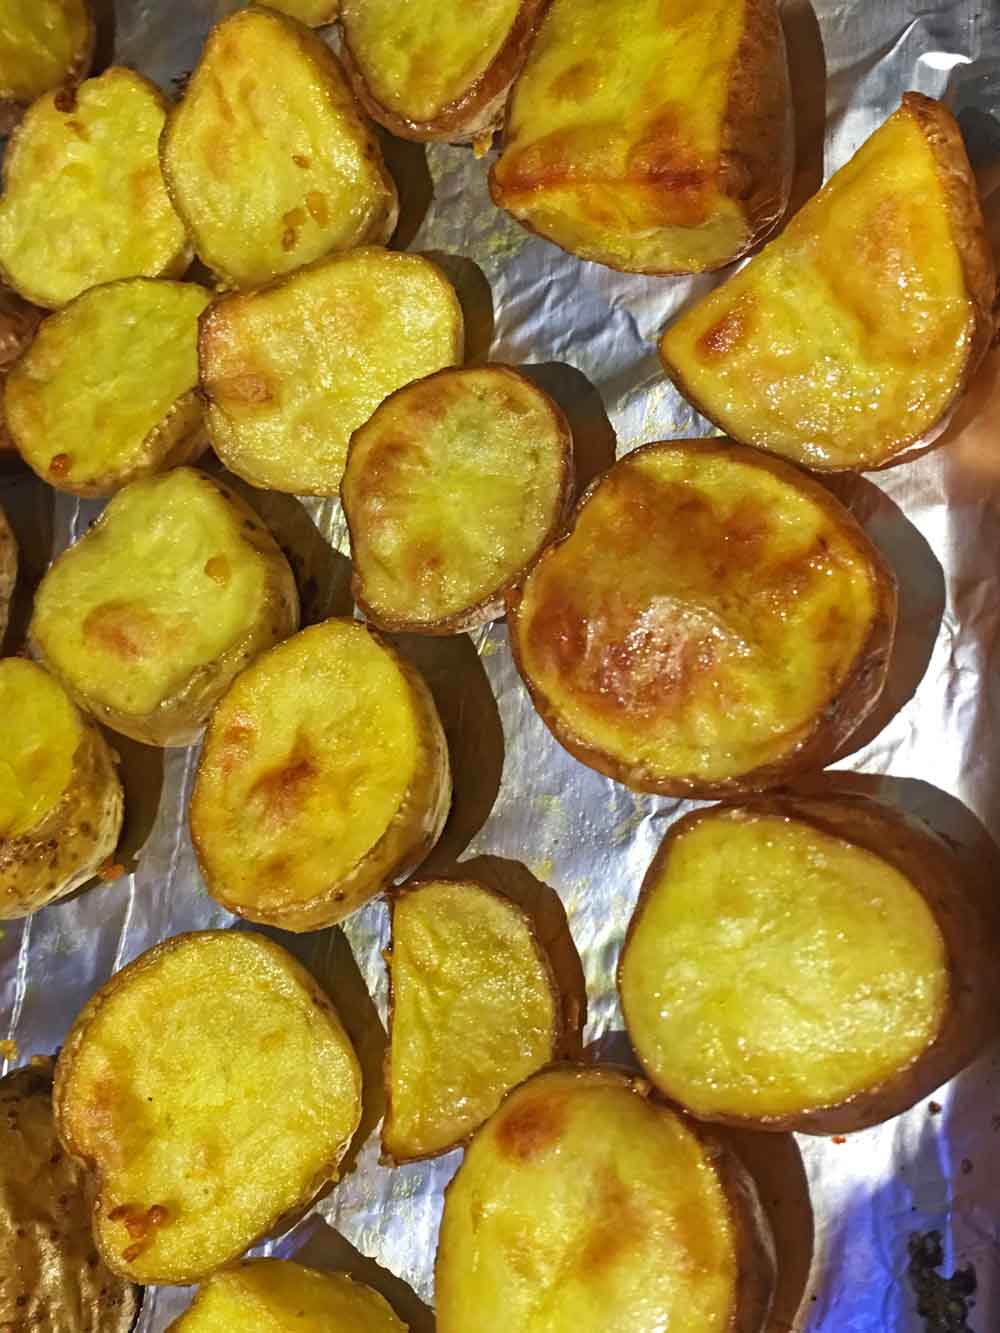 roasted baby potatoes recipe